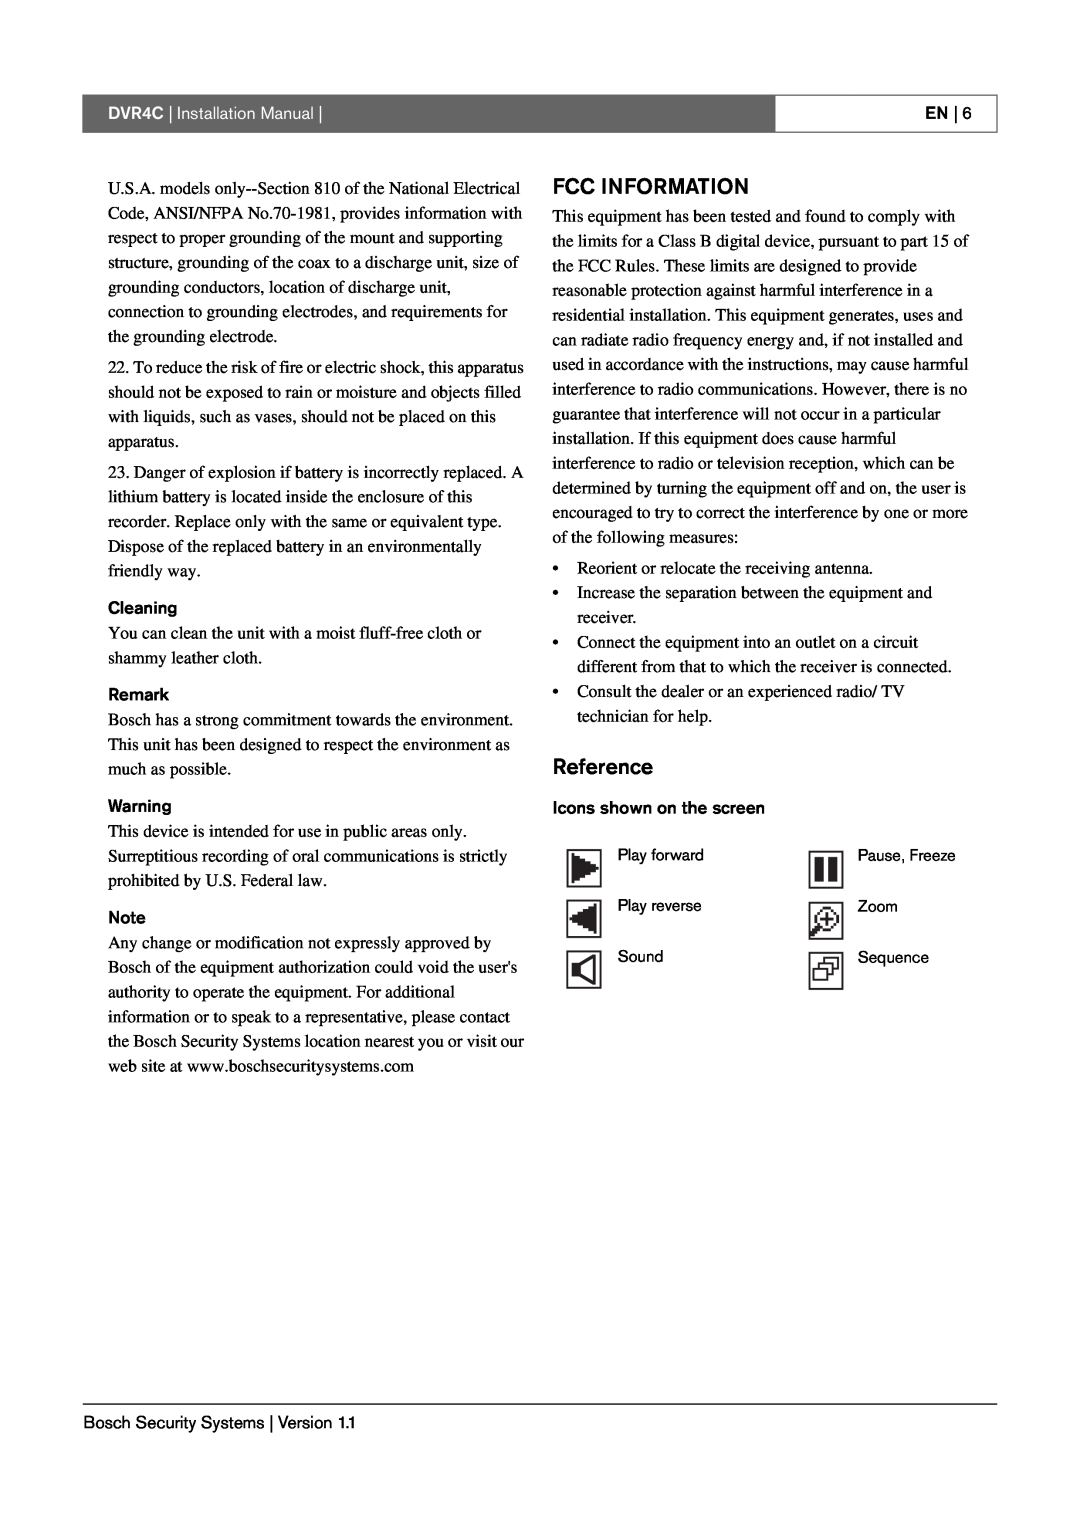 Bosch Appliances installation manual Fcc Information, Reference, DVR4C | Installation Manual, En, Cleaning, Remark 